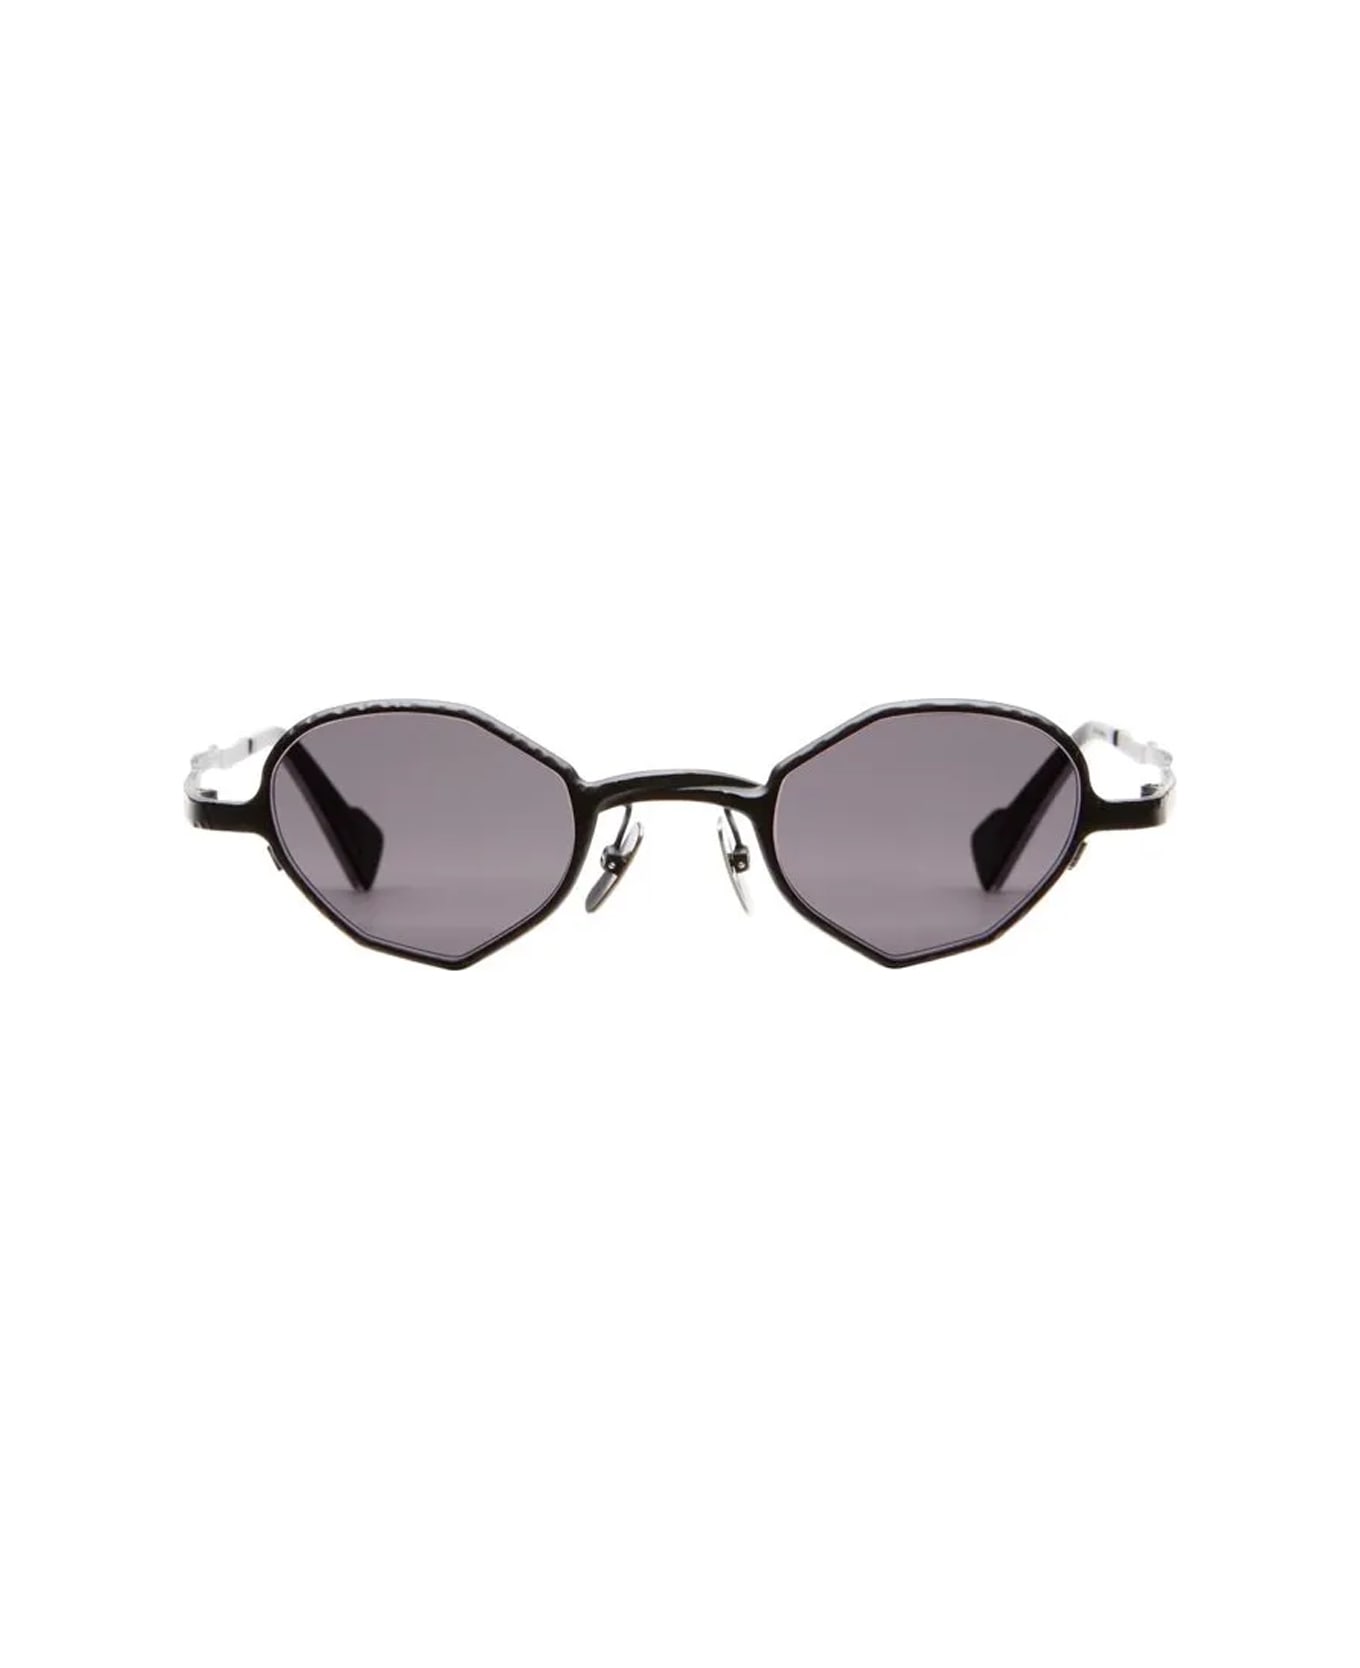 Kuboraum Maske Z20 Bm 2y Sunglasses - Nero